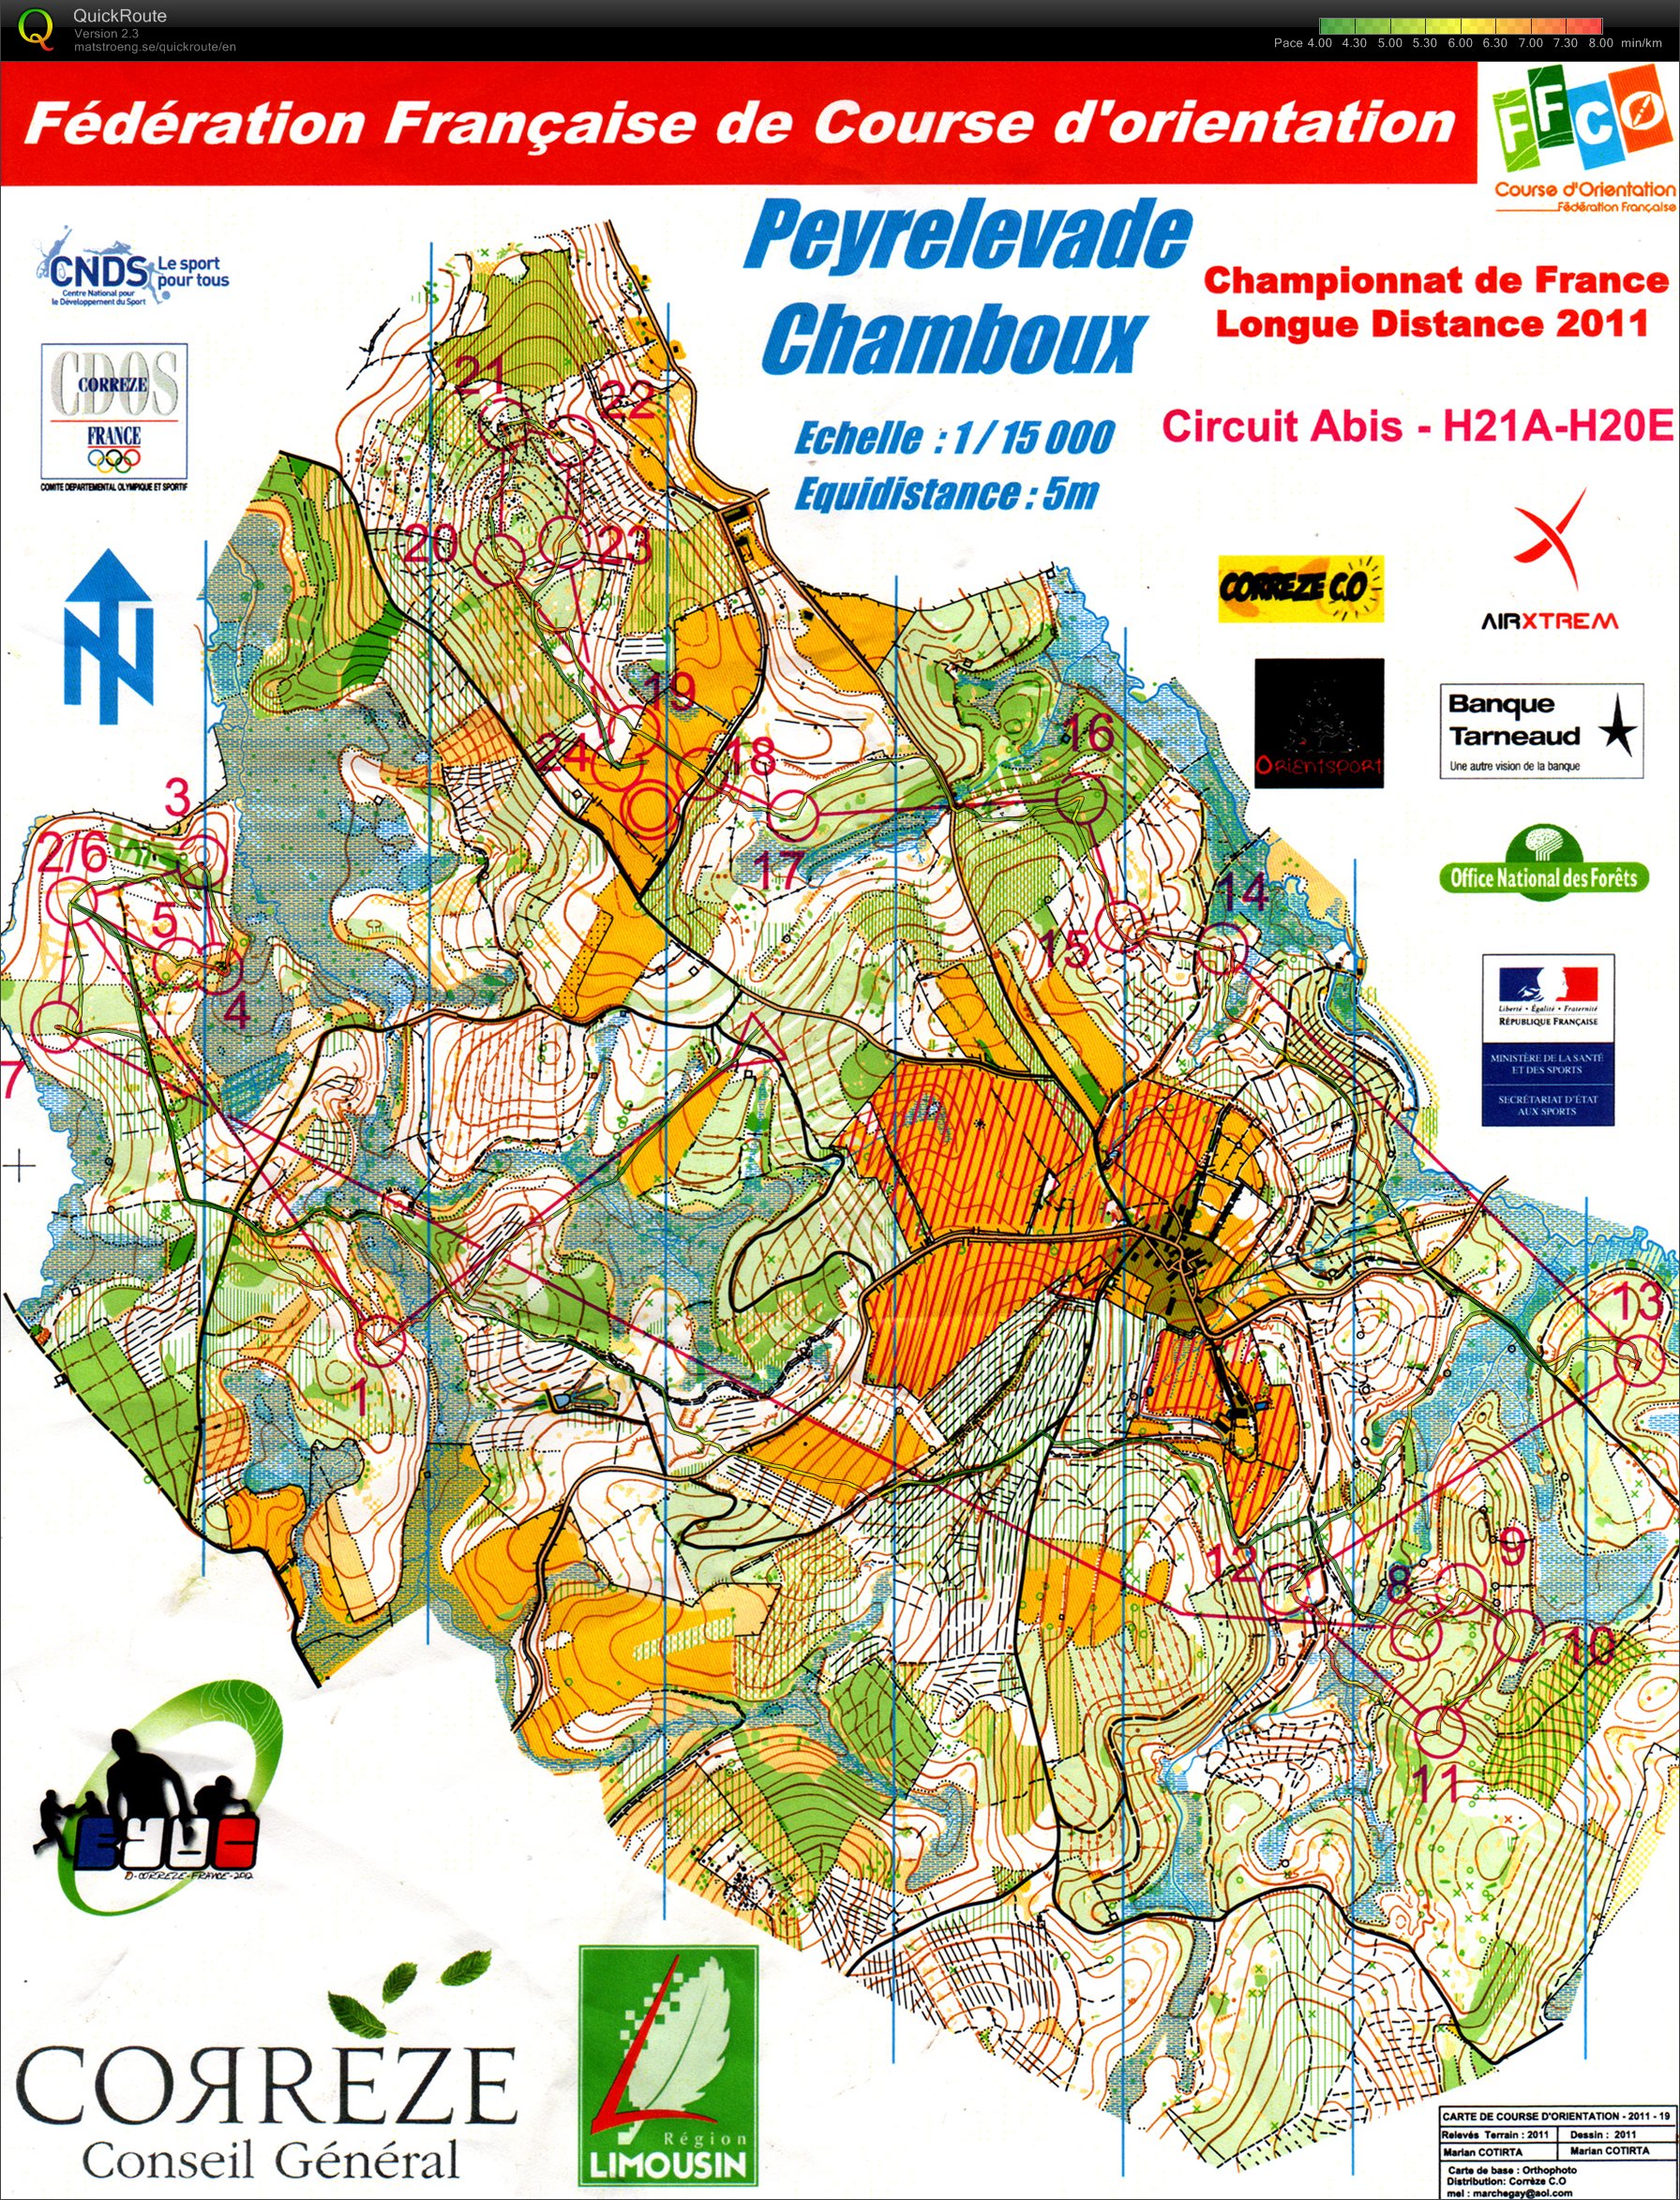 Championnats de France 2011 - LD (16.07.2011)